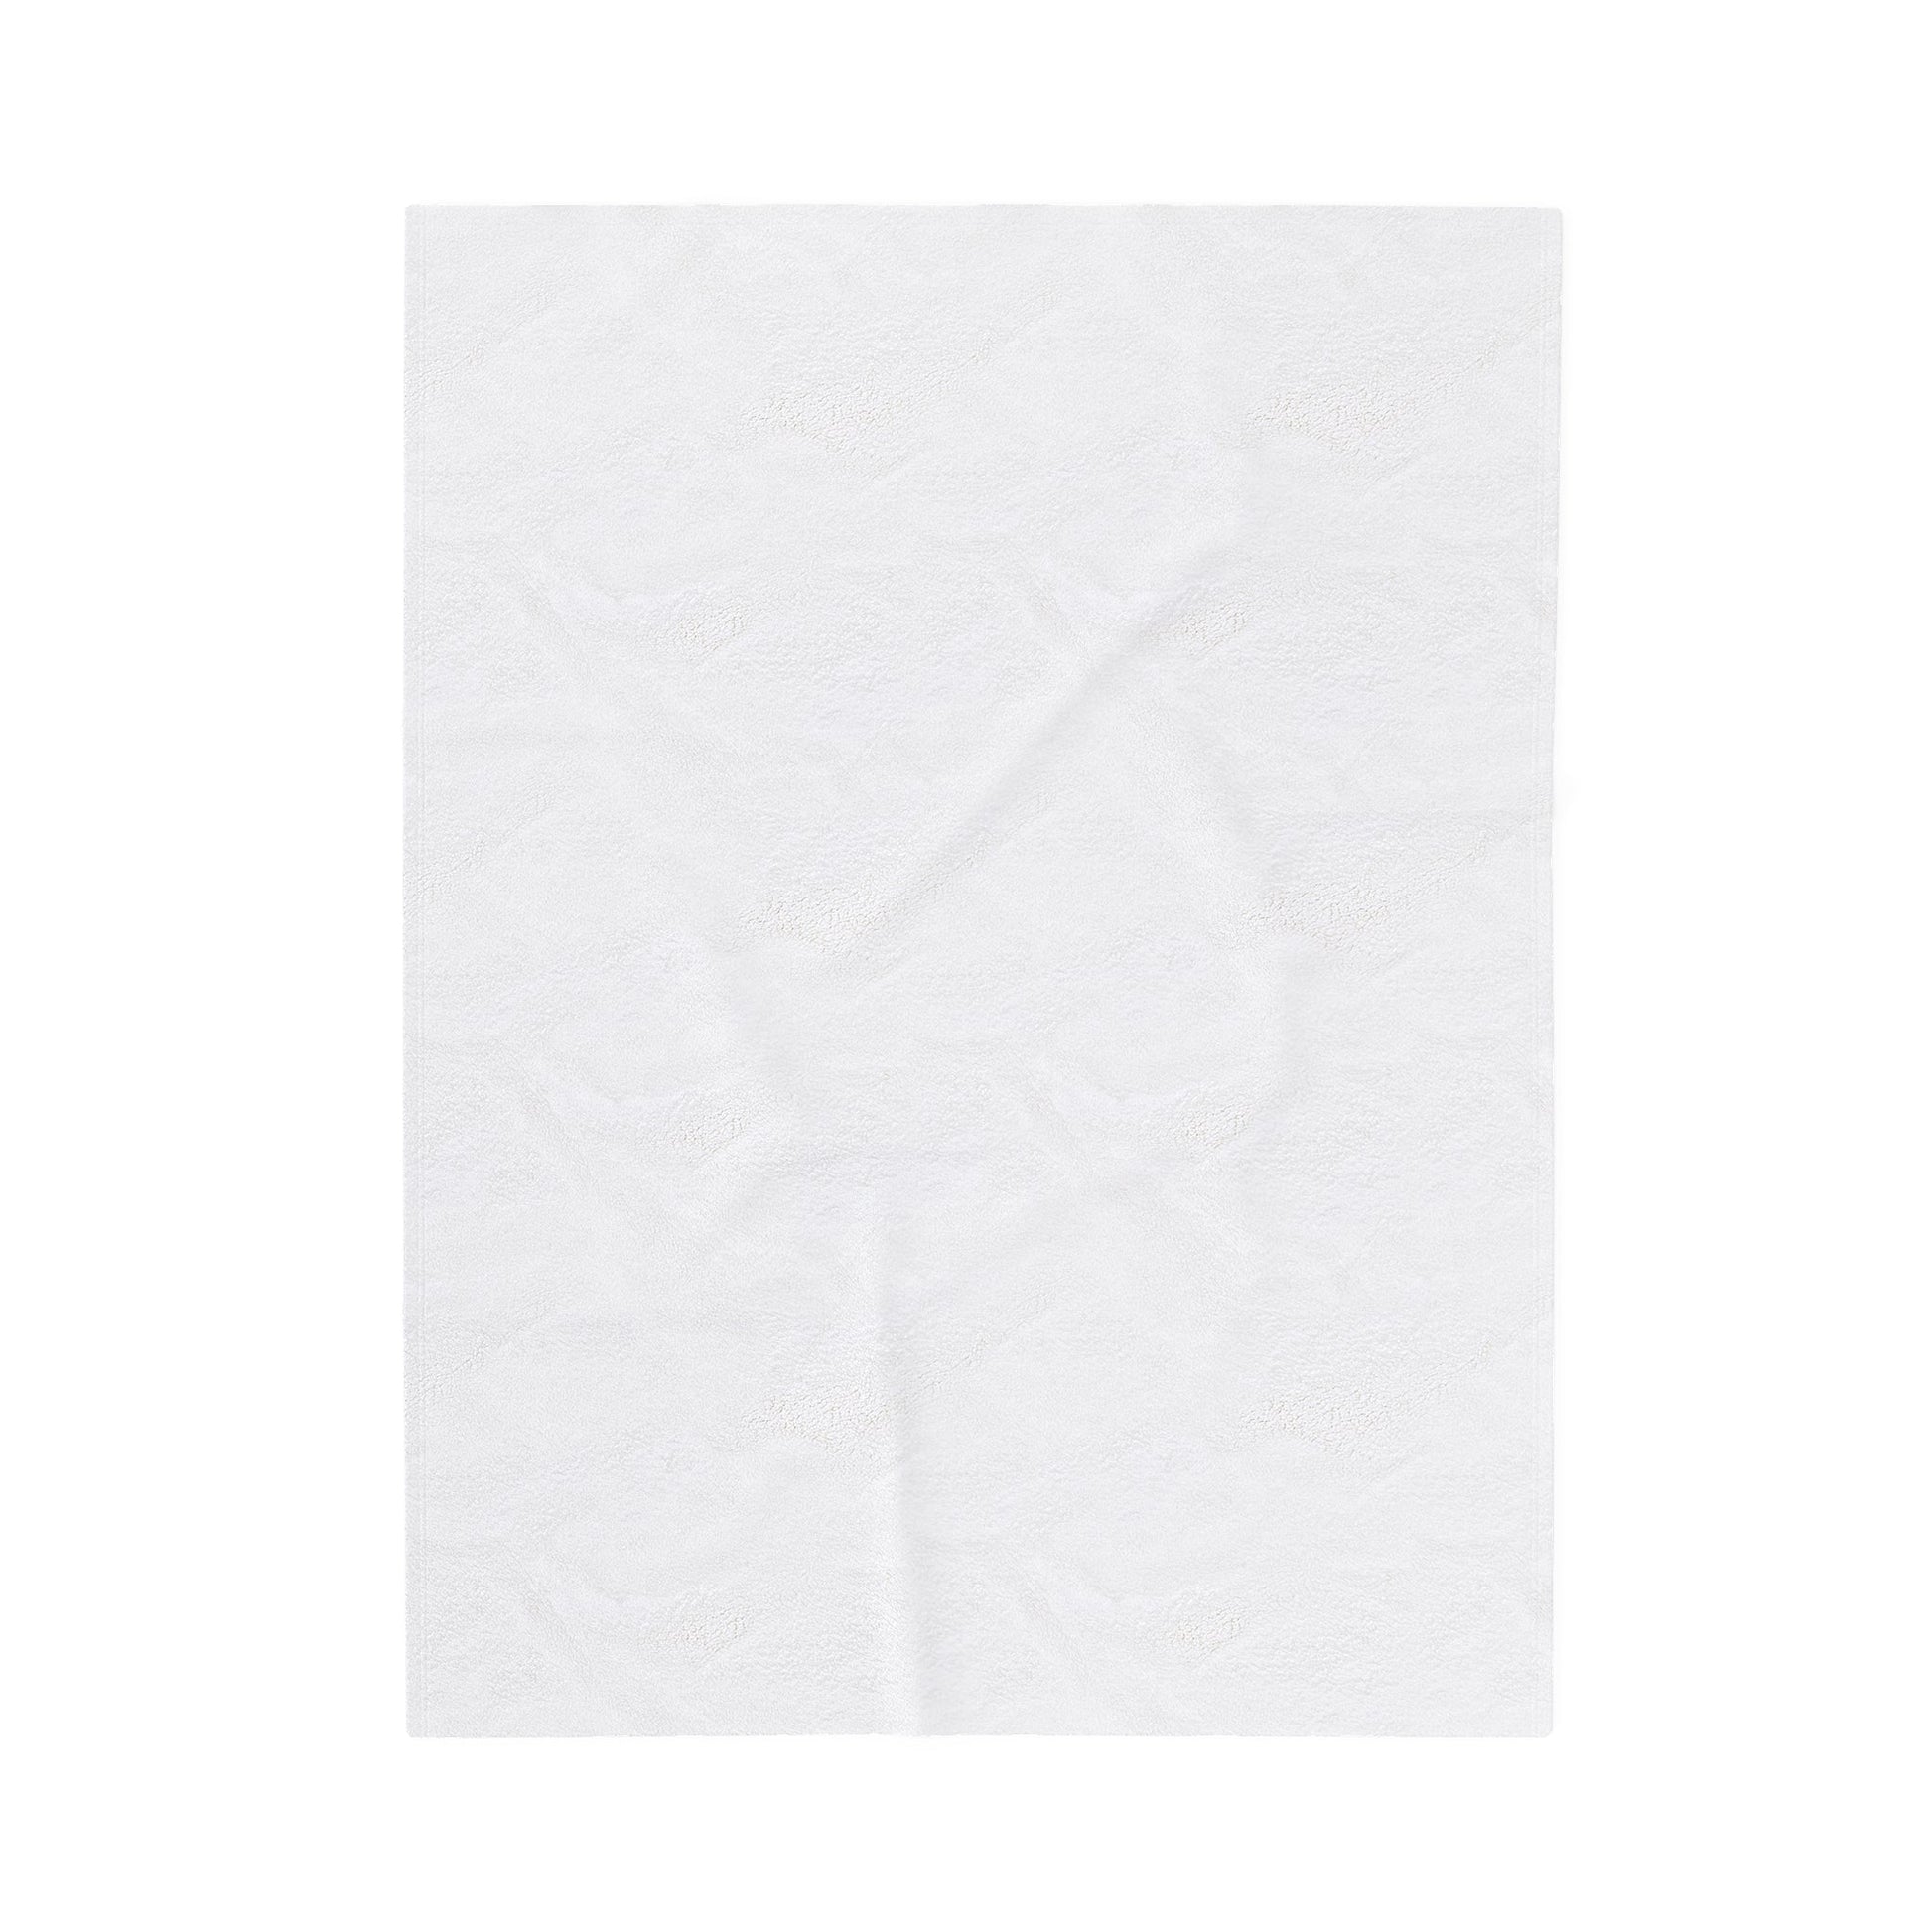 AceFlux - Plush Blanket-Plush Blankets-Mr.Zao - Krazy Art Gallery